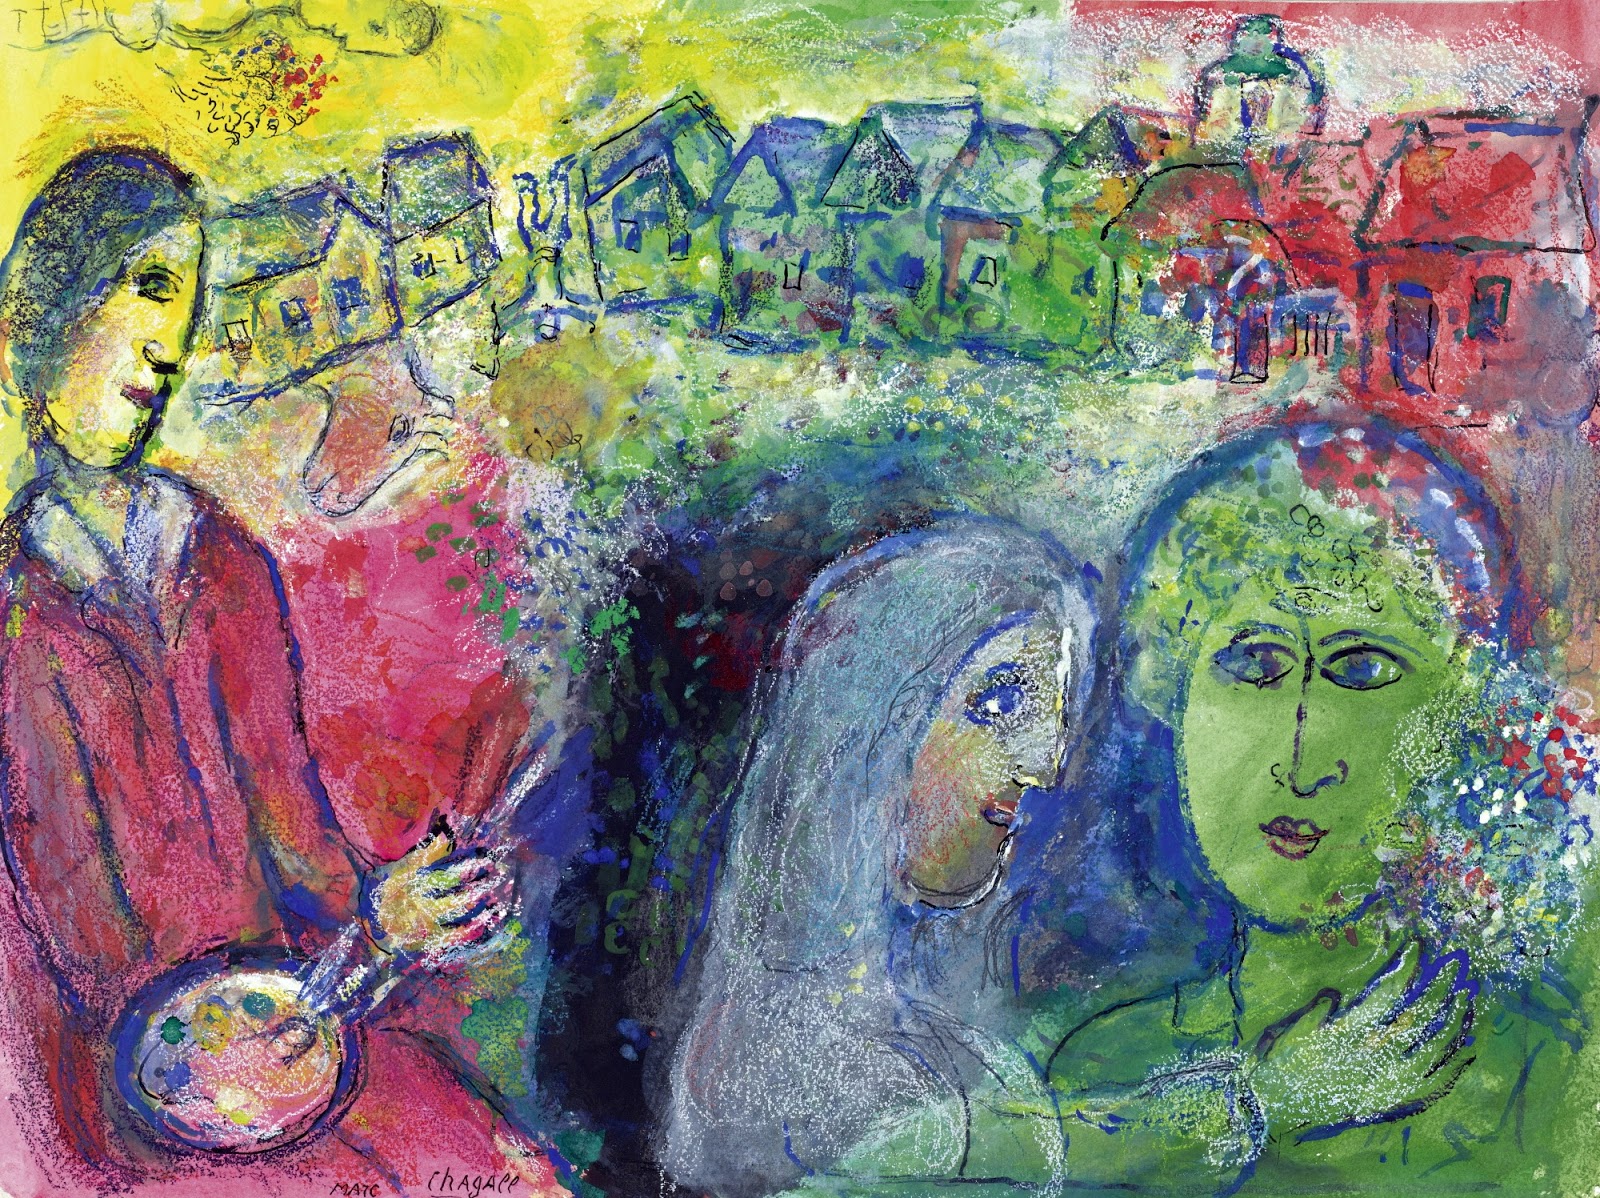 Marc+Chagall-1887-1985 (287).jpg